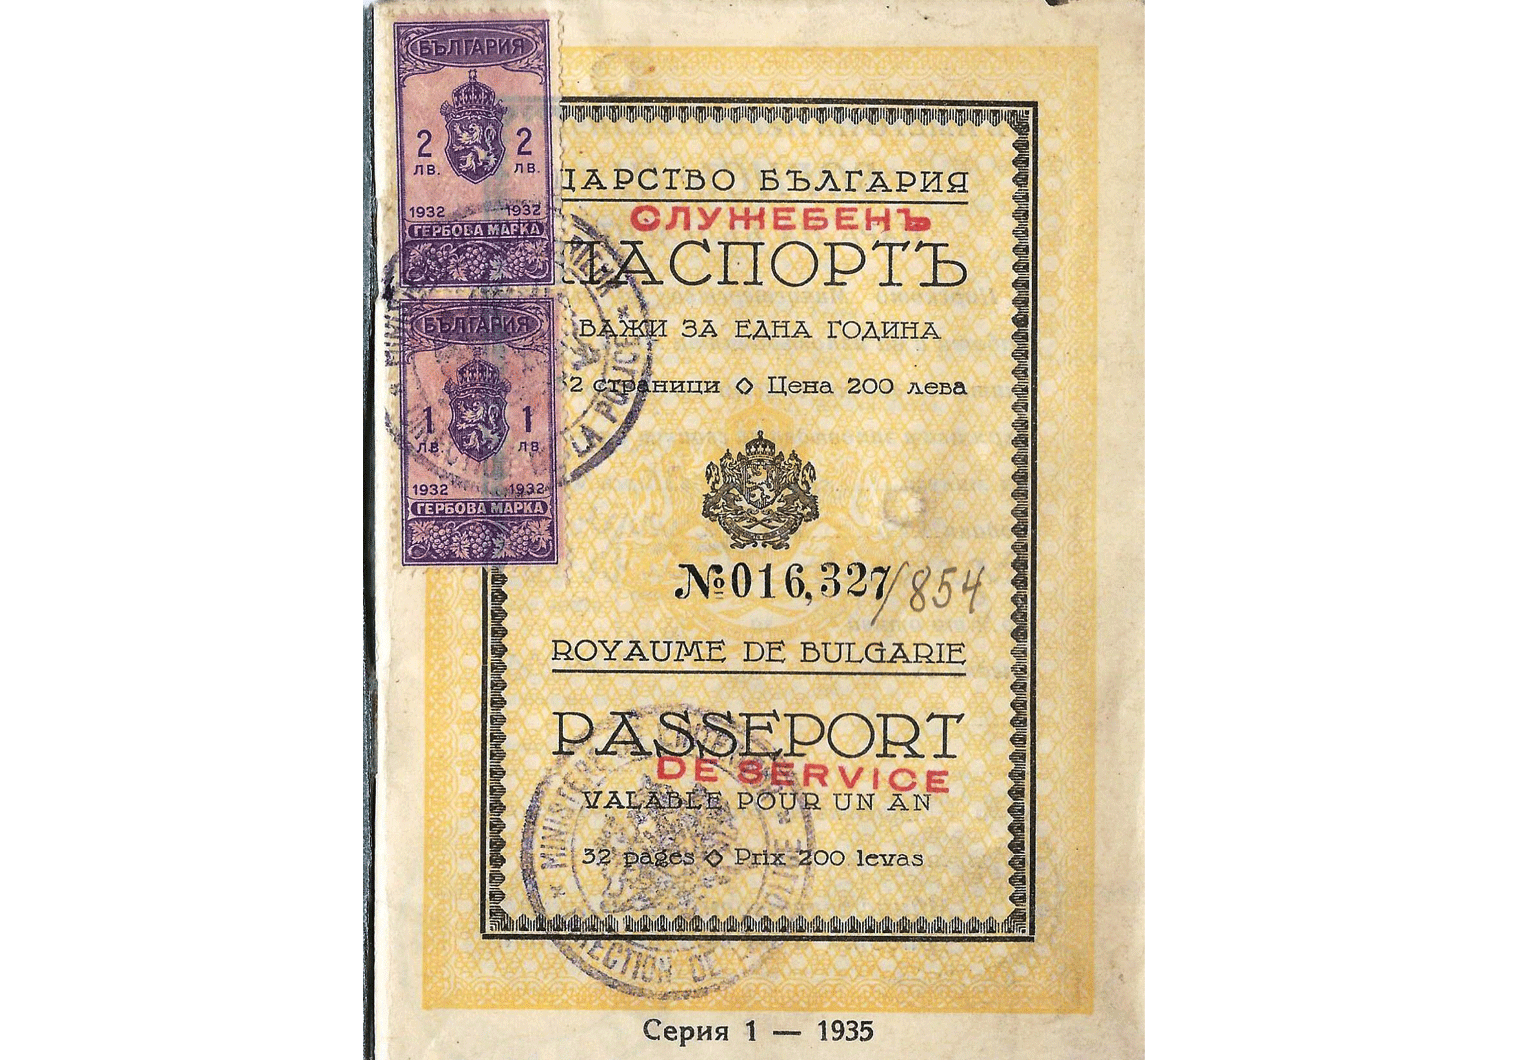 1936 Bulgarian service passport